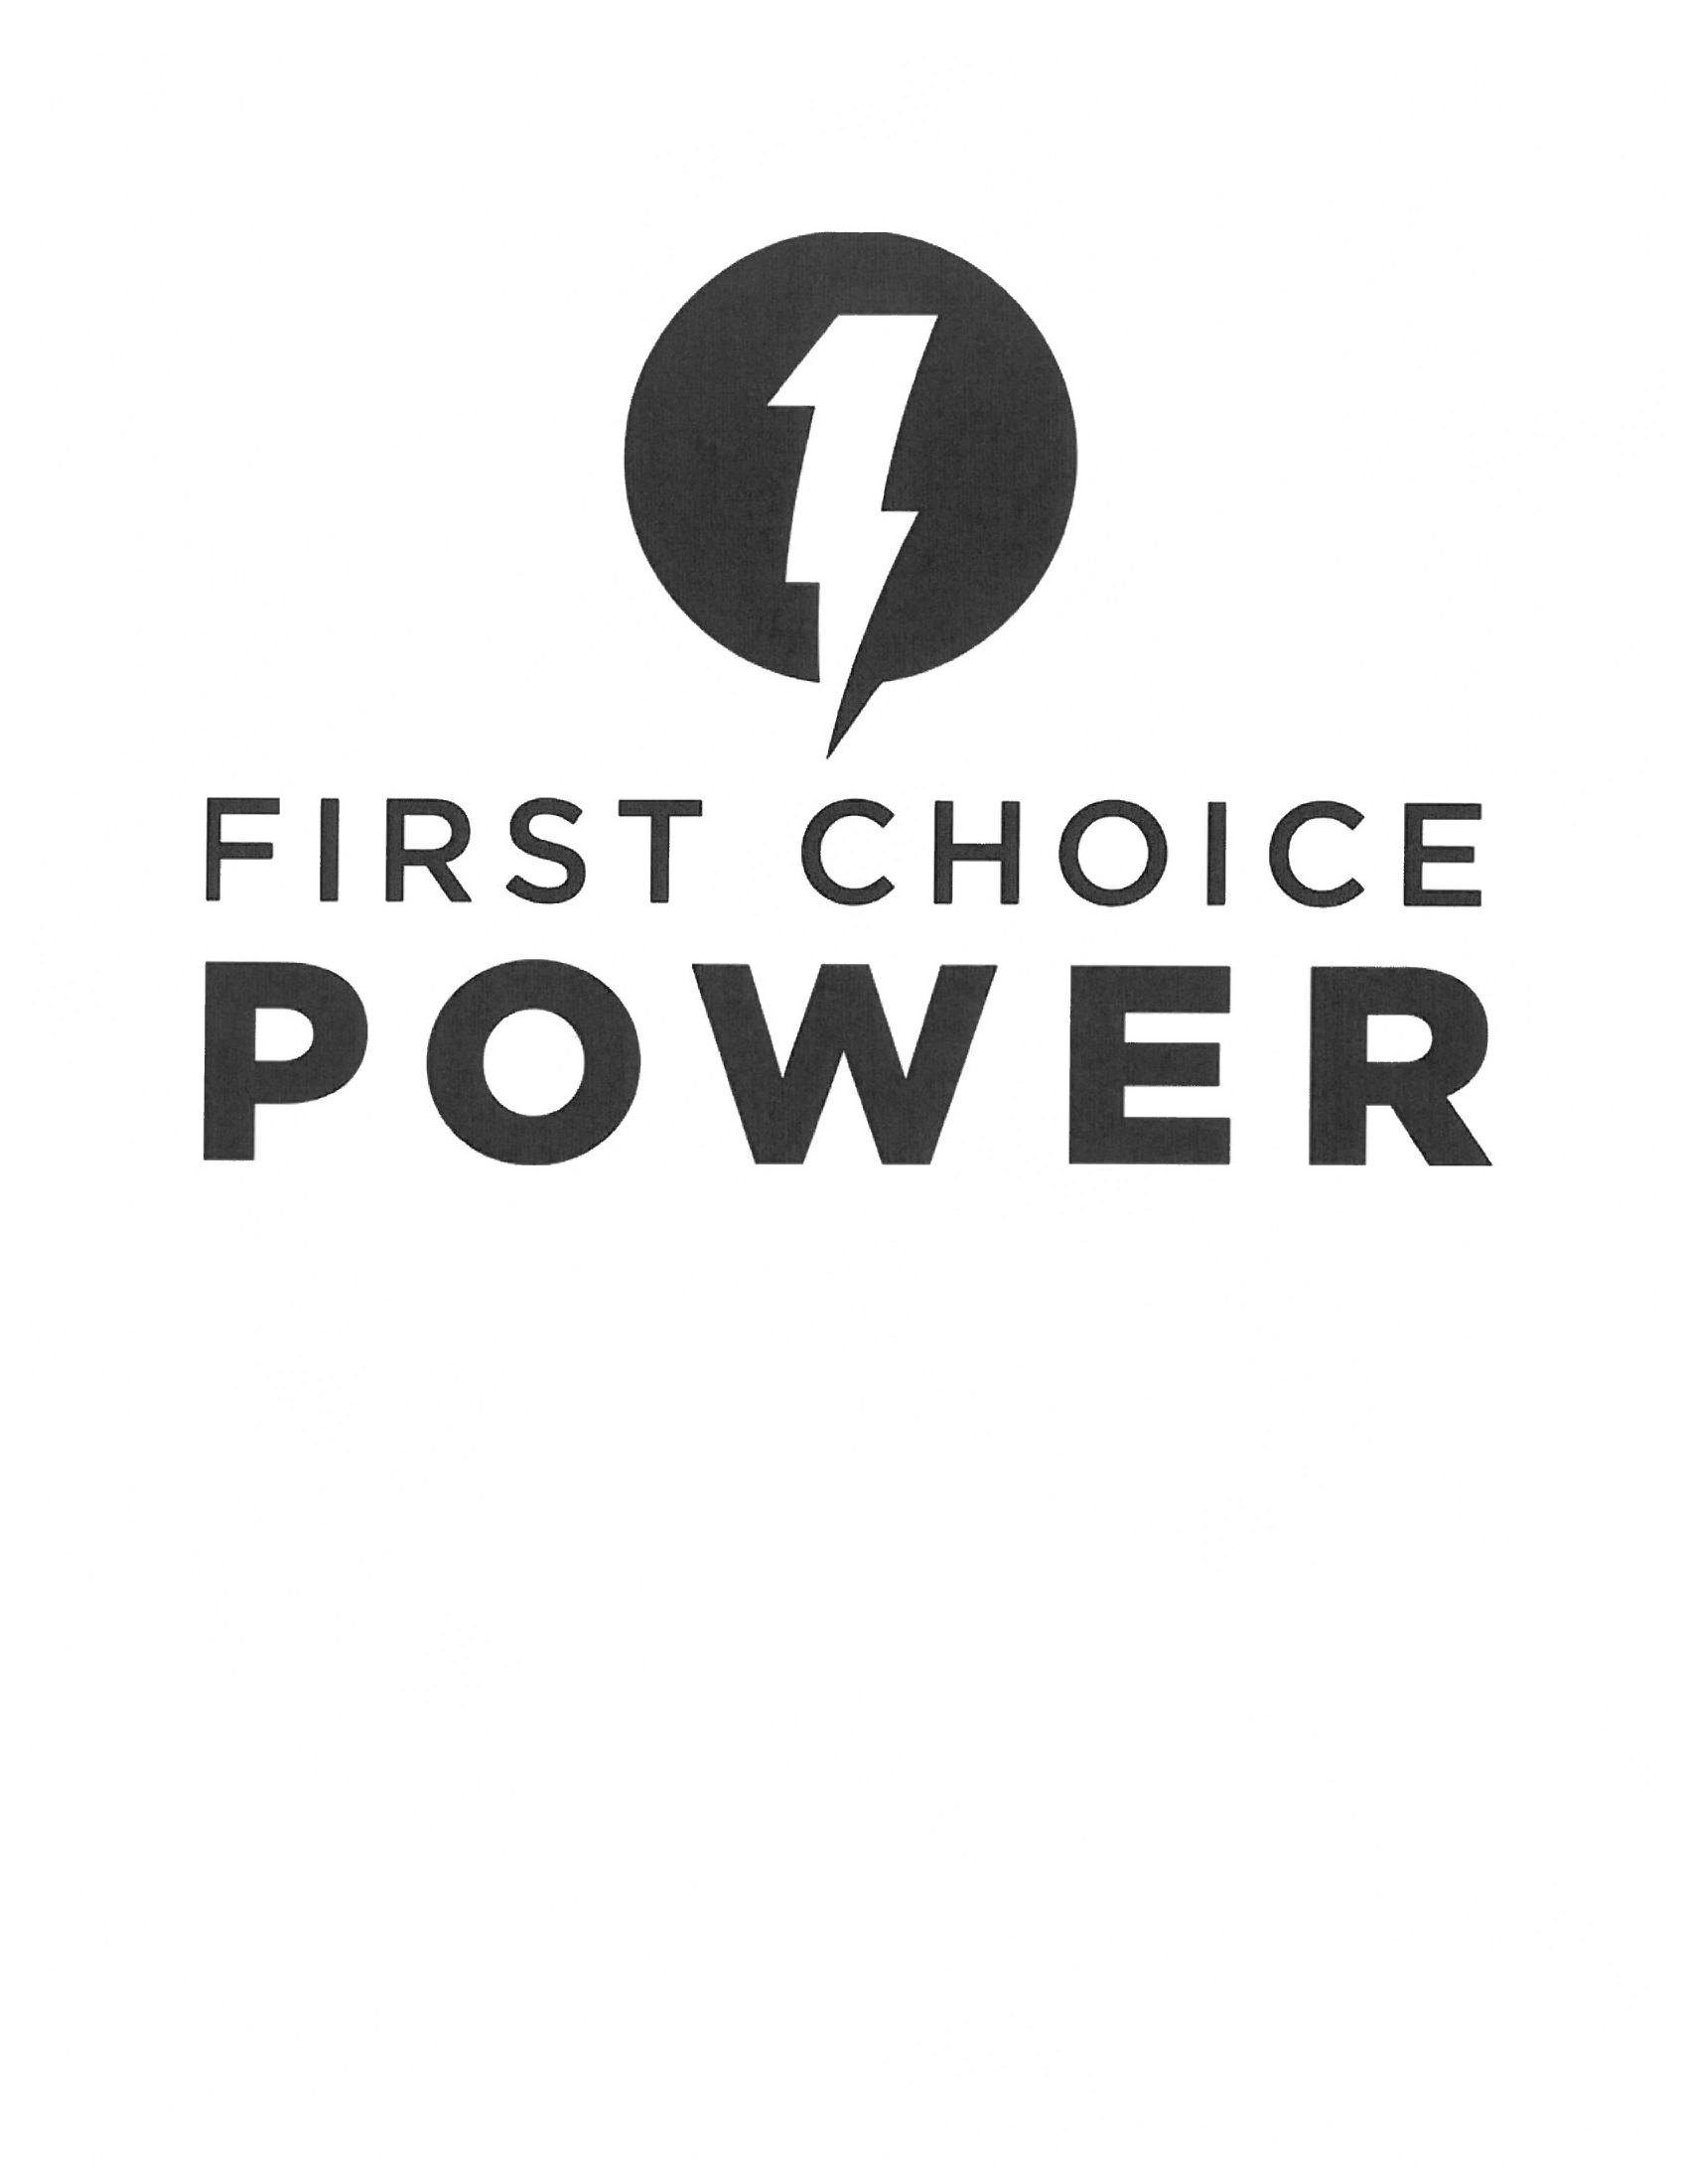  FIRST CHOICE POWER